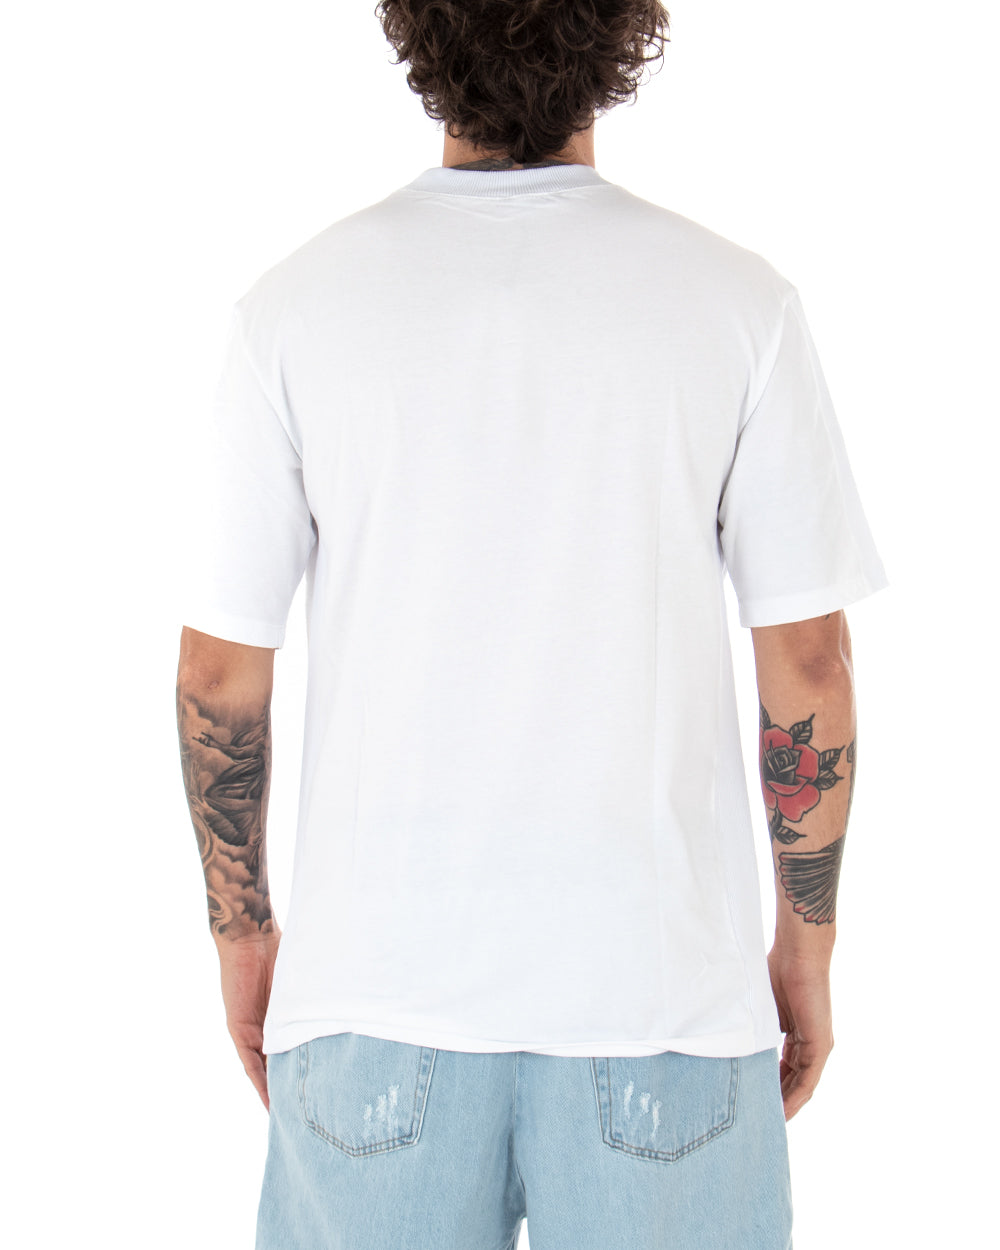 T-Shirt Uomo Tinta Unita Bianco Fascia Elastico Manica Corta Casual GIOSAL